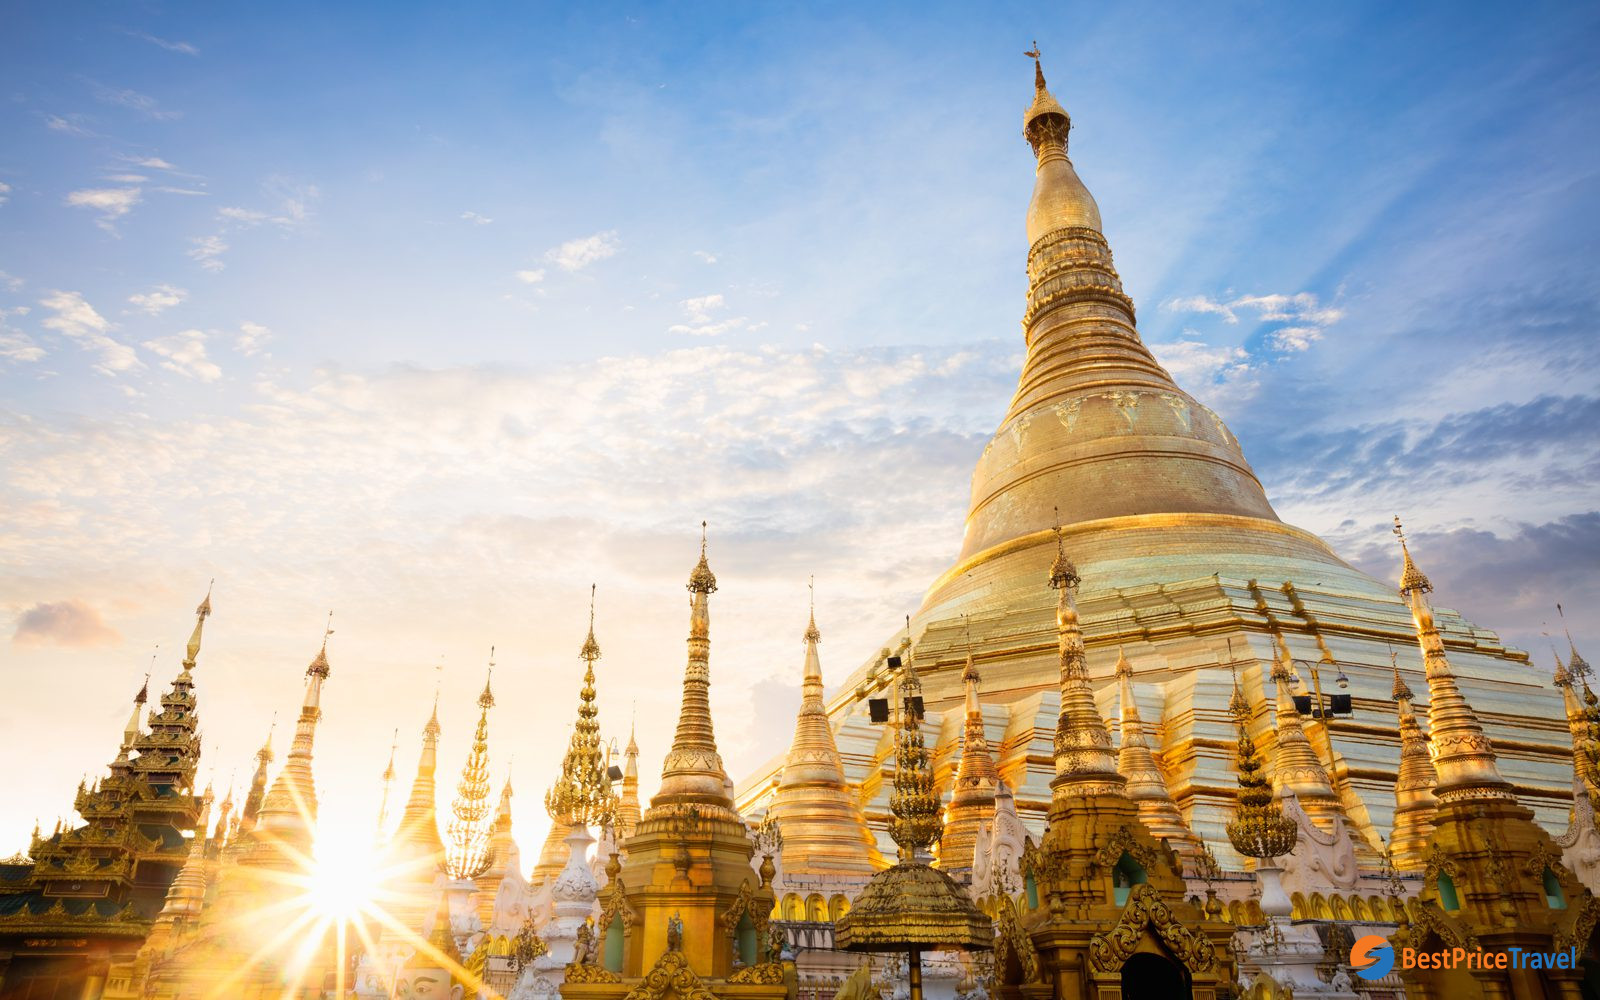 The beautiful glow shining on Shwedagon Pagoda